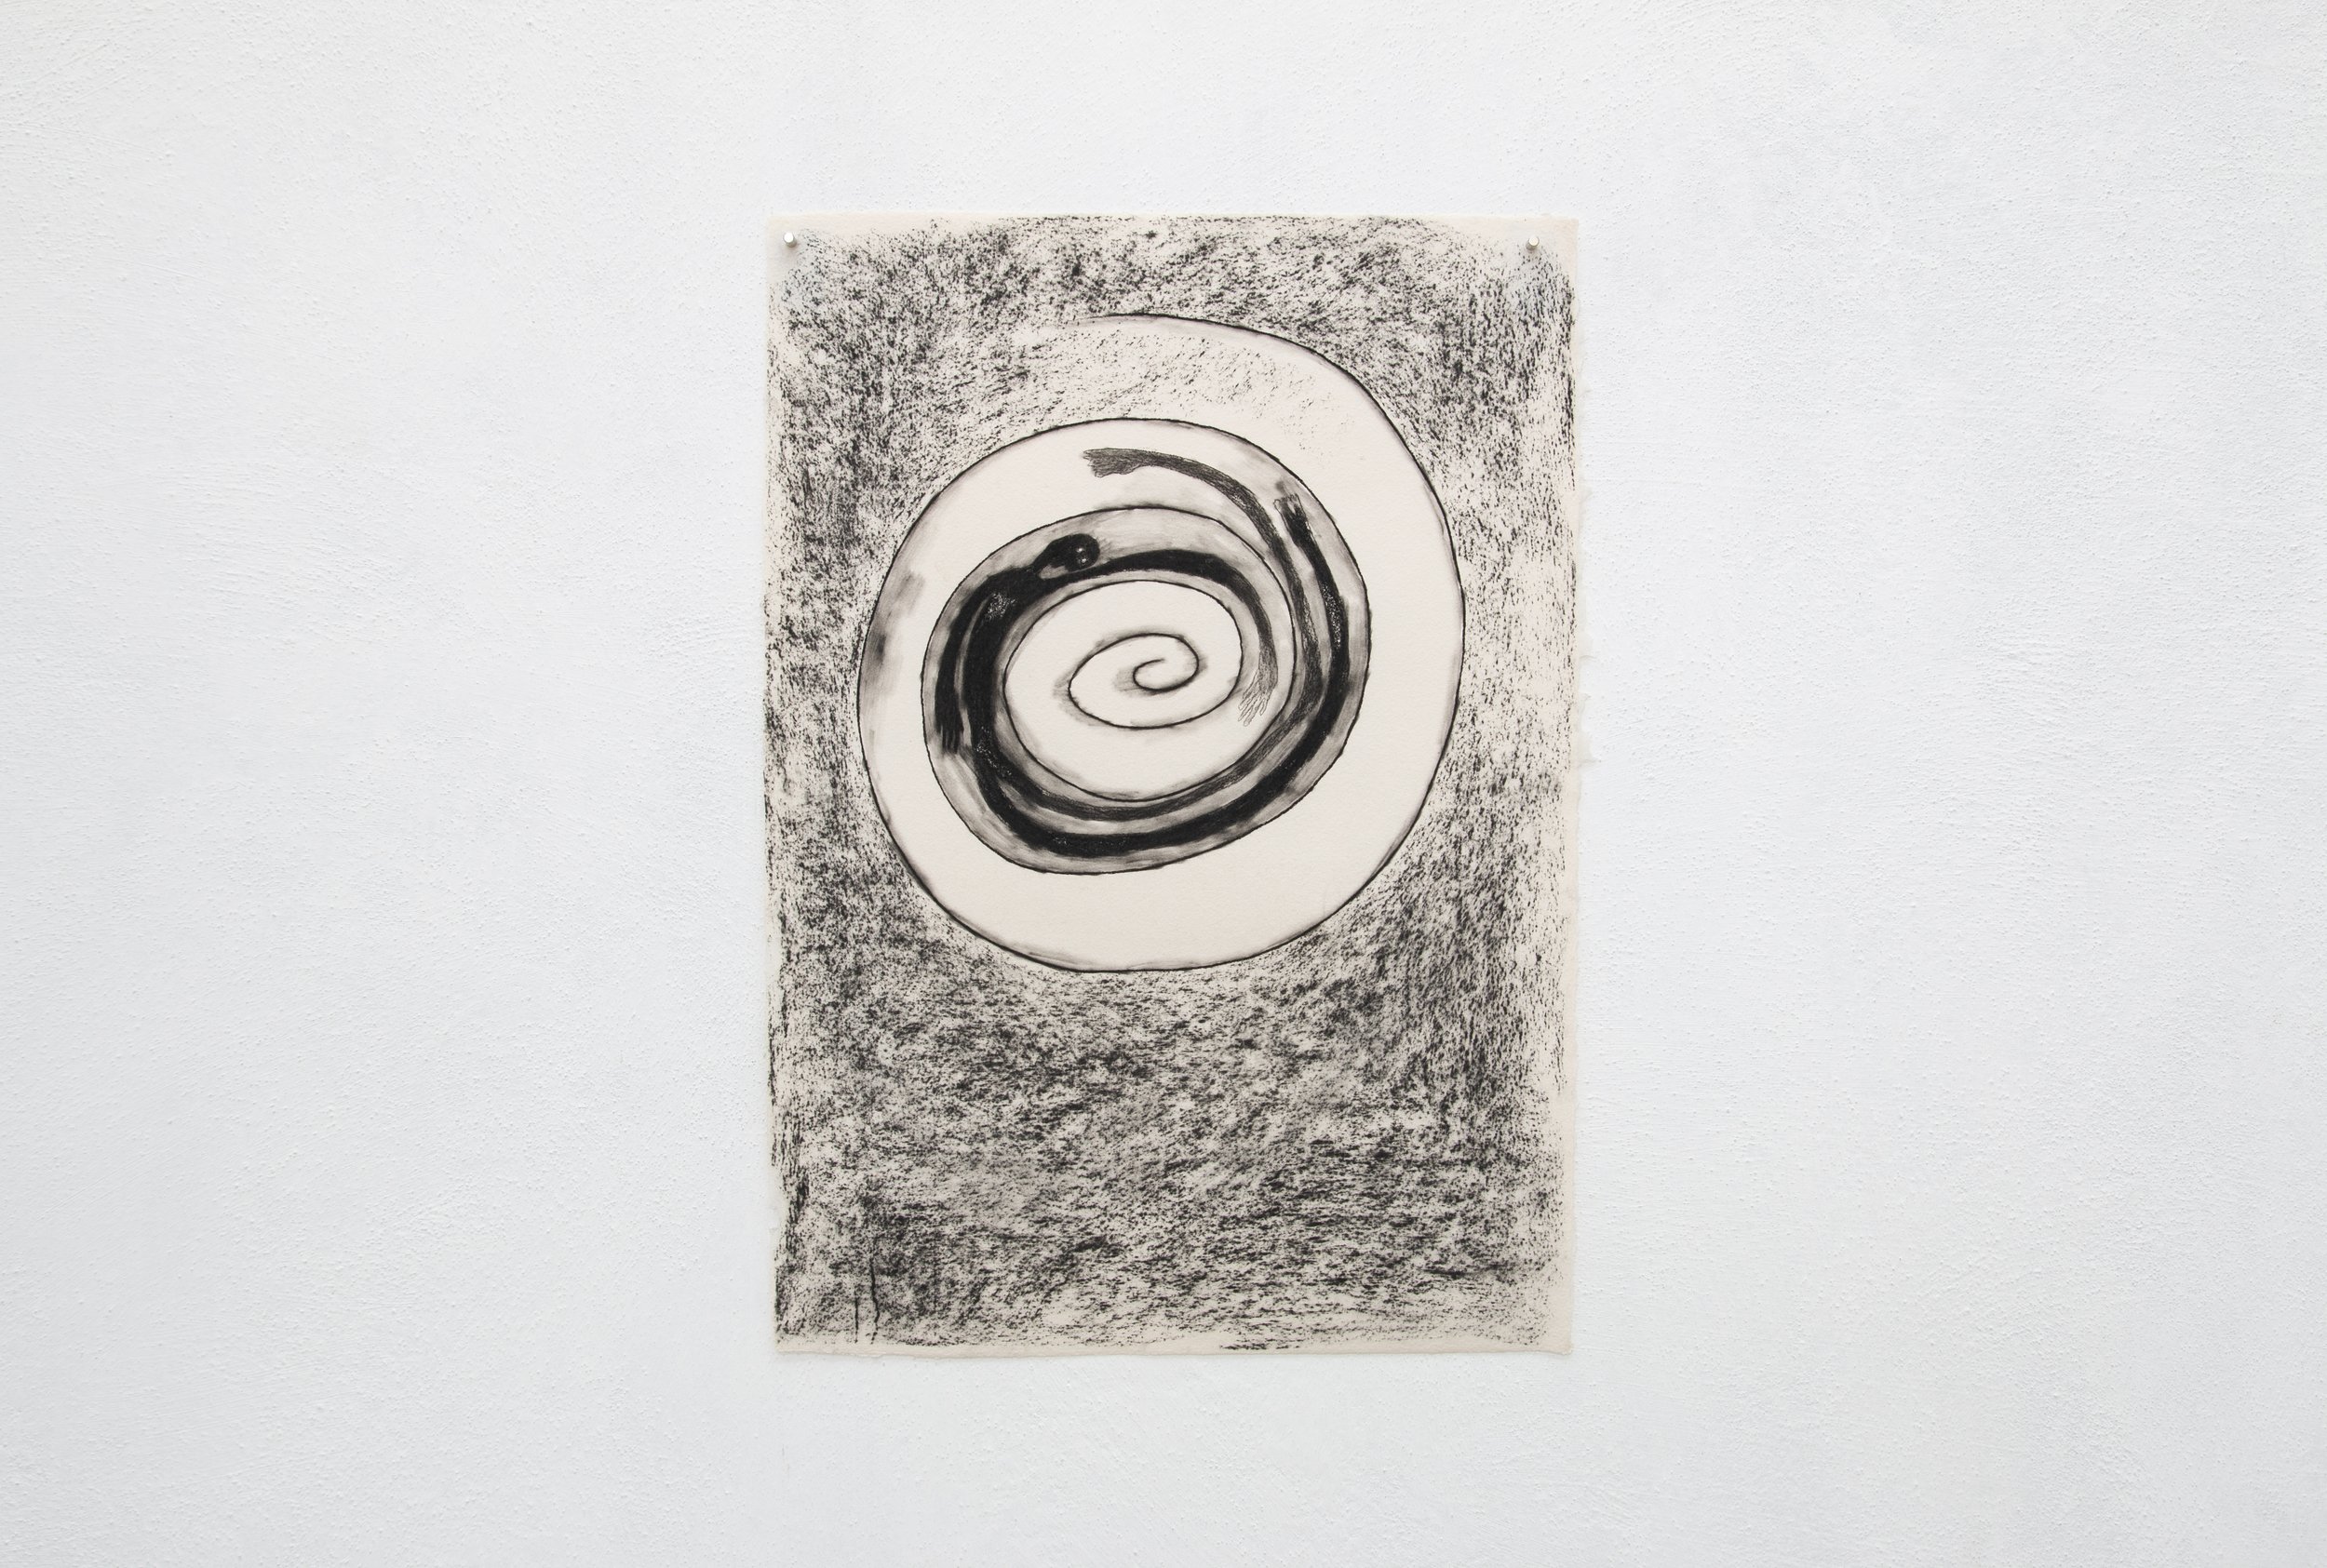   Despedida dimensional (Dimensional Farewell) , 2021, charcoal on paper, 60 x 43 cm / 23.6 x 16.9 